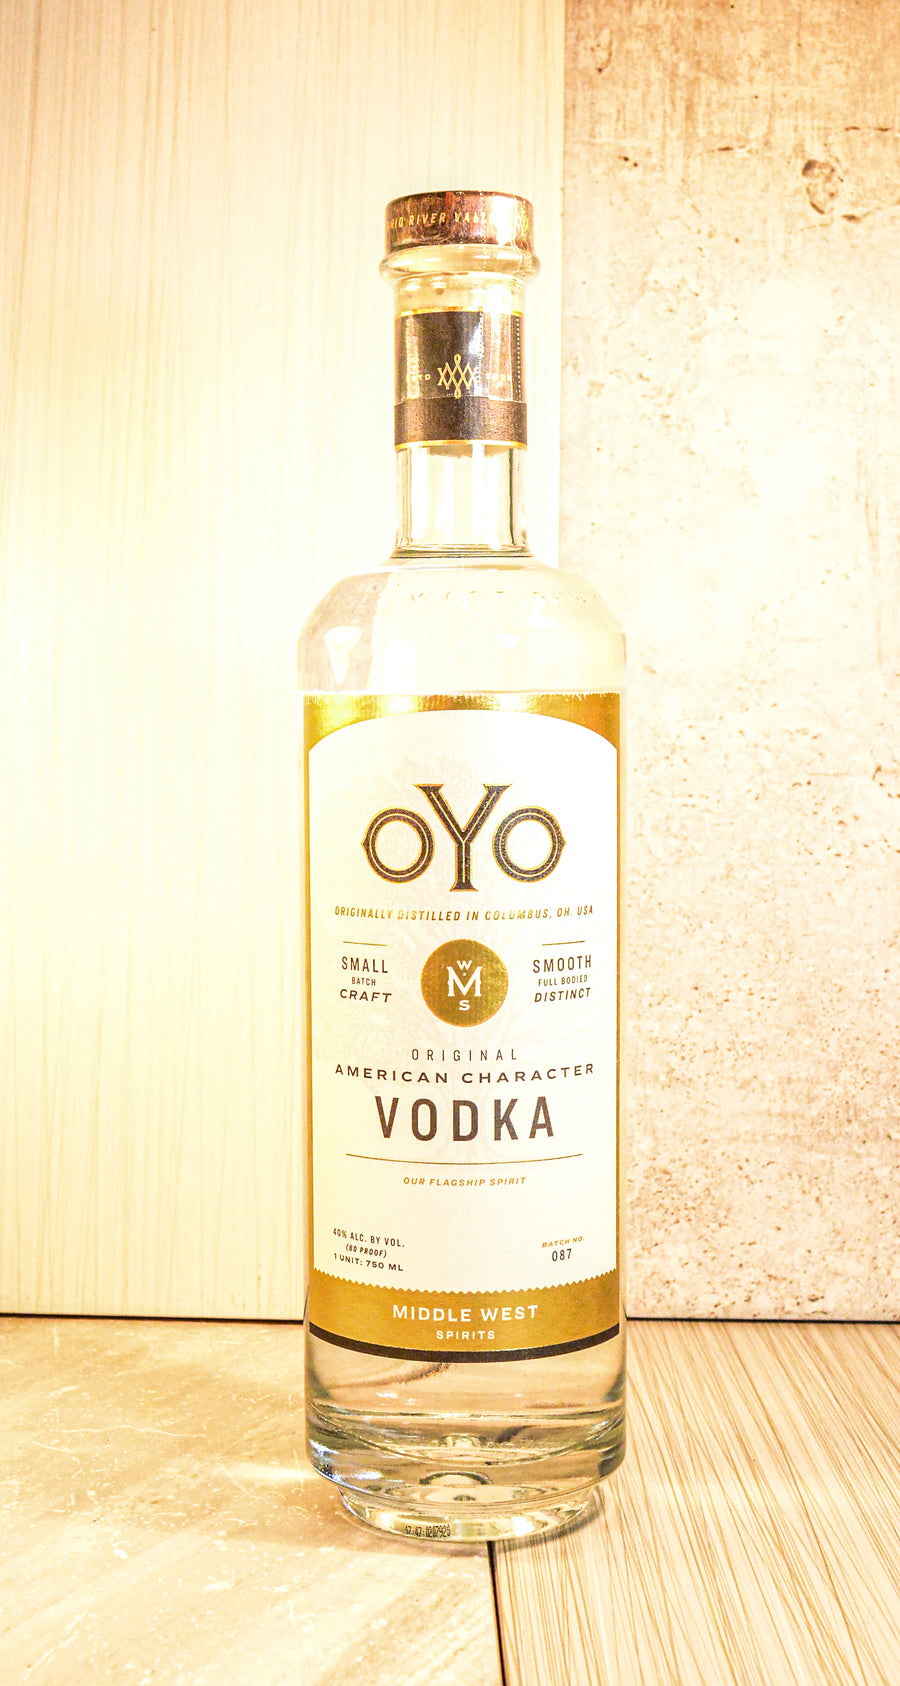 Middle West Spirits, OYO Vodka